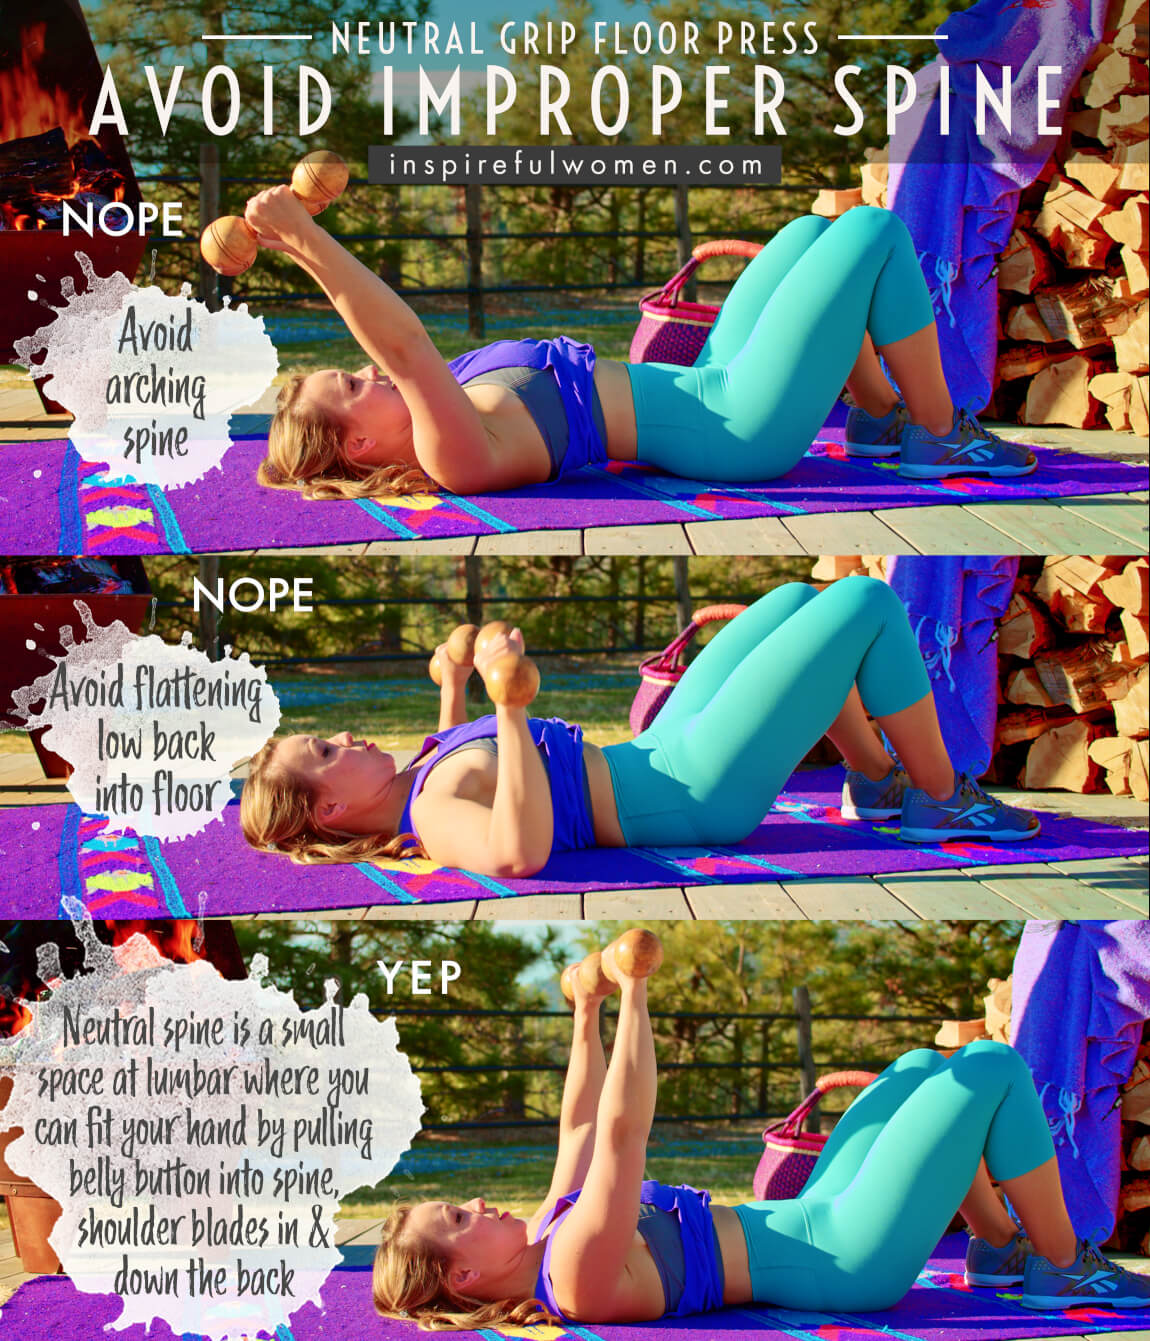 avoid-improper-spine-hammer-neutral-grip-floor-press-proper-form